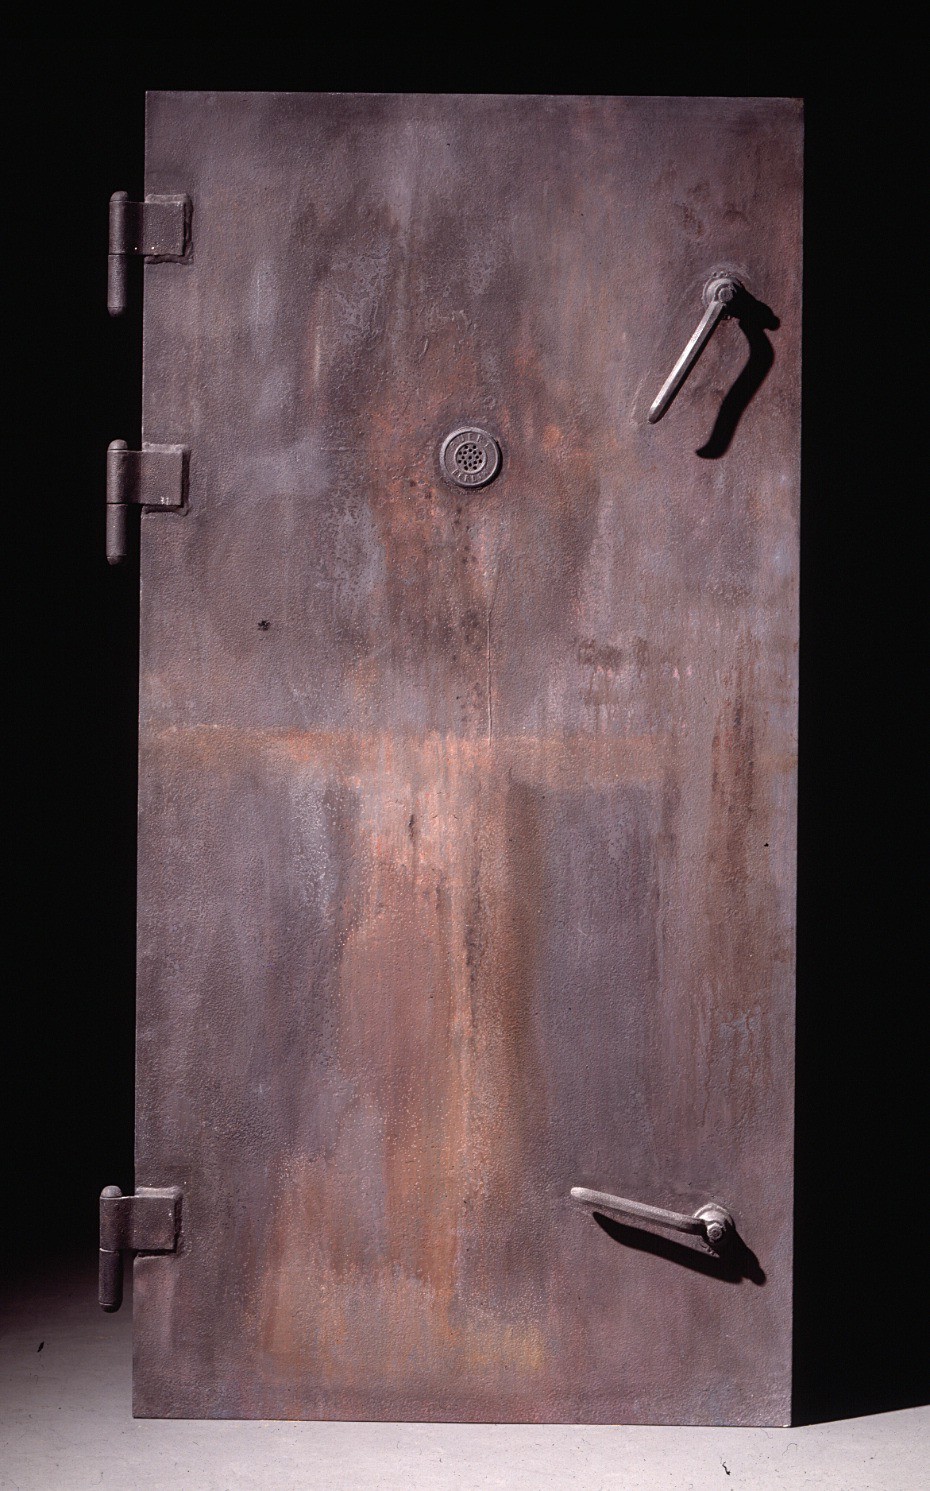 Casting of Majdanek gas chamber door [LCID: 199824np]